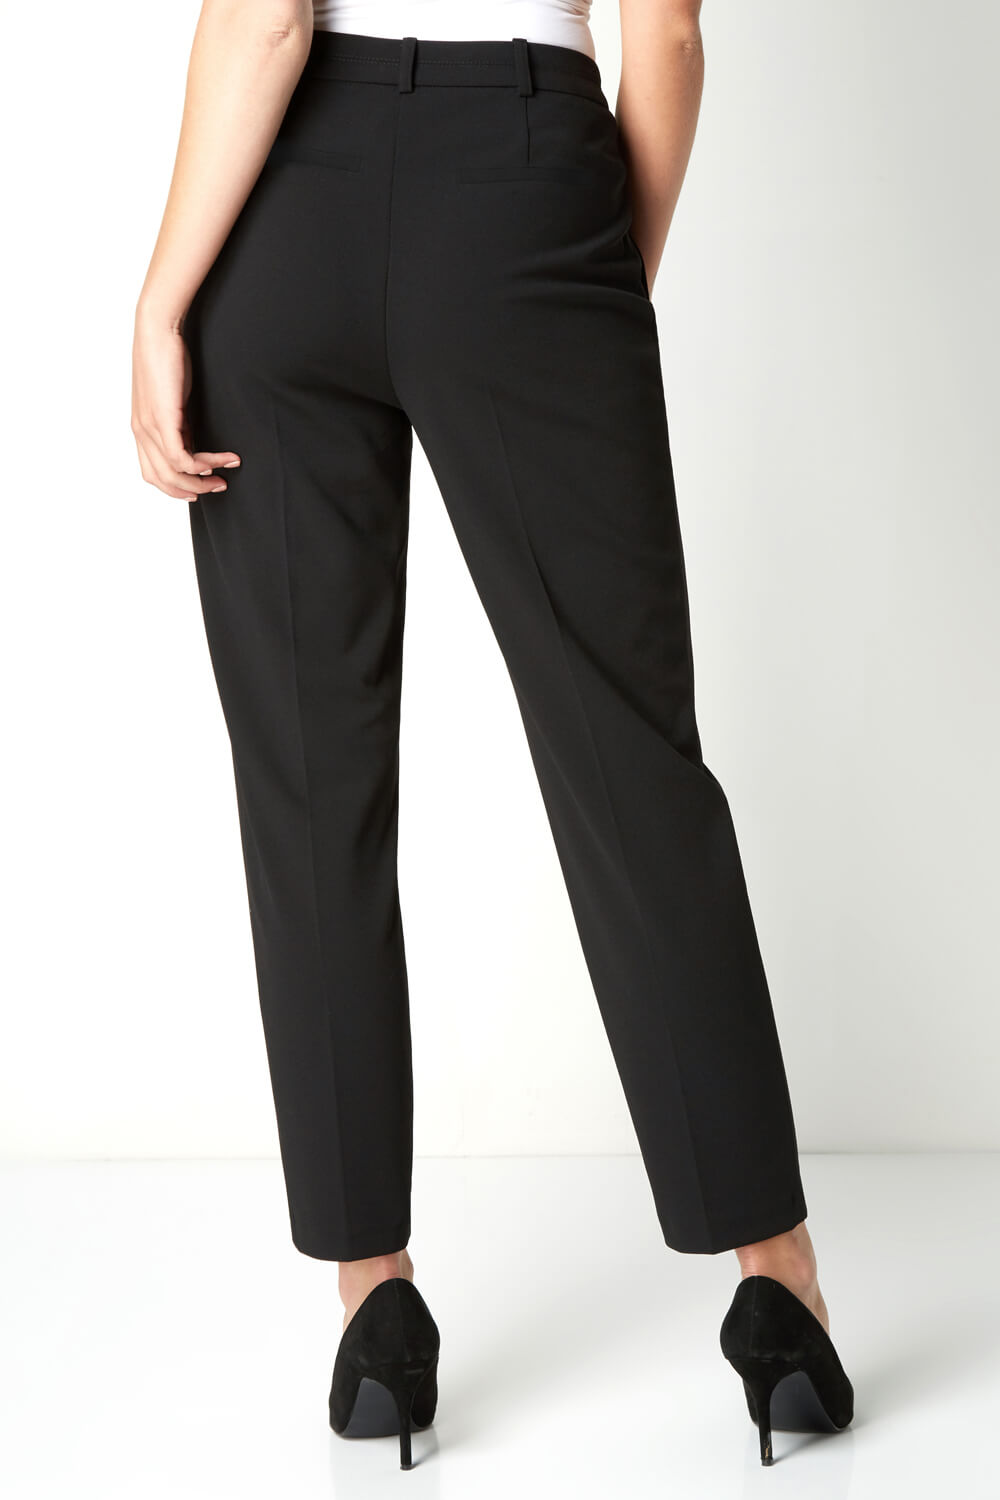 Black Straight Leg Zip Pocket Trousers, Image 2 of 4